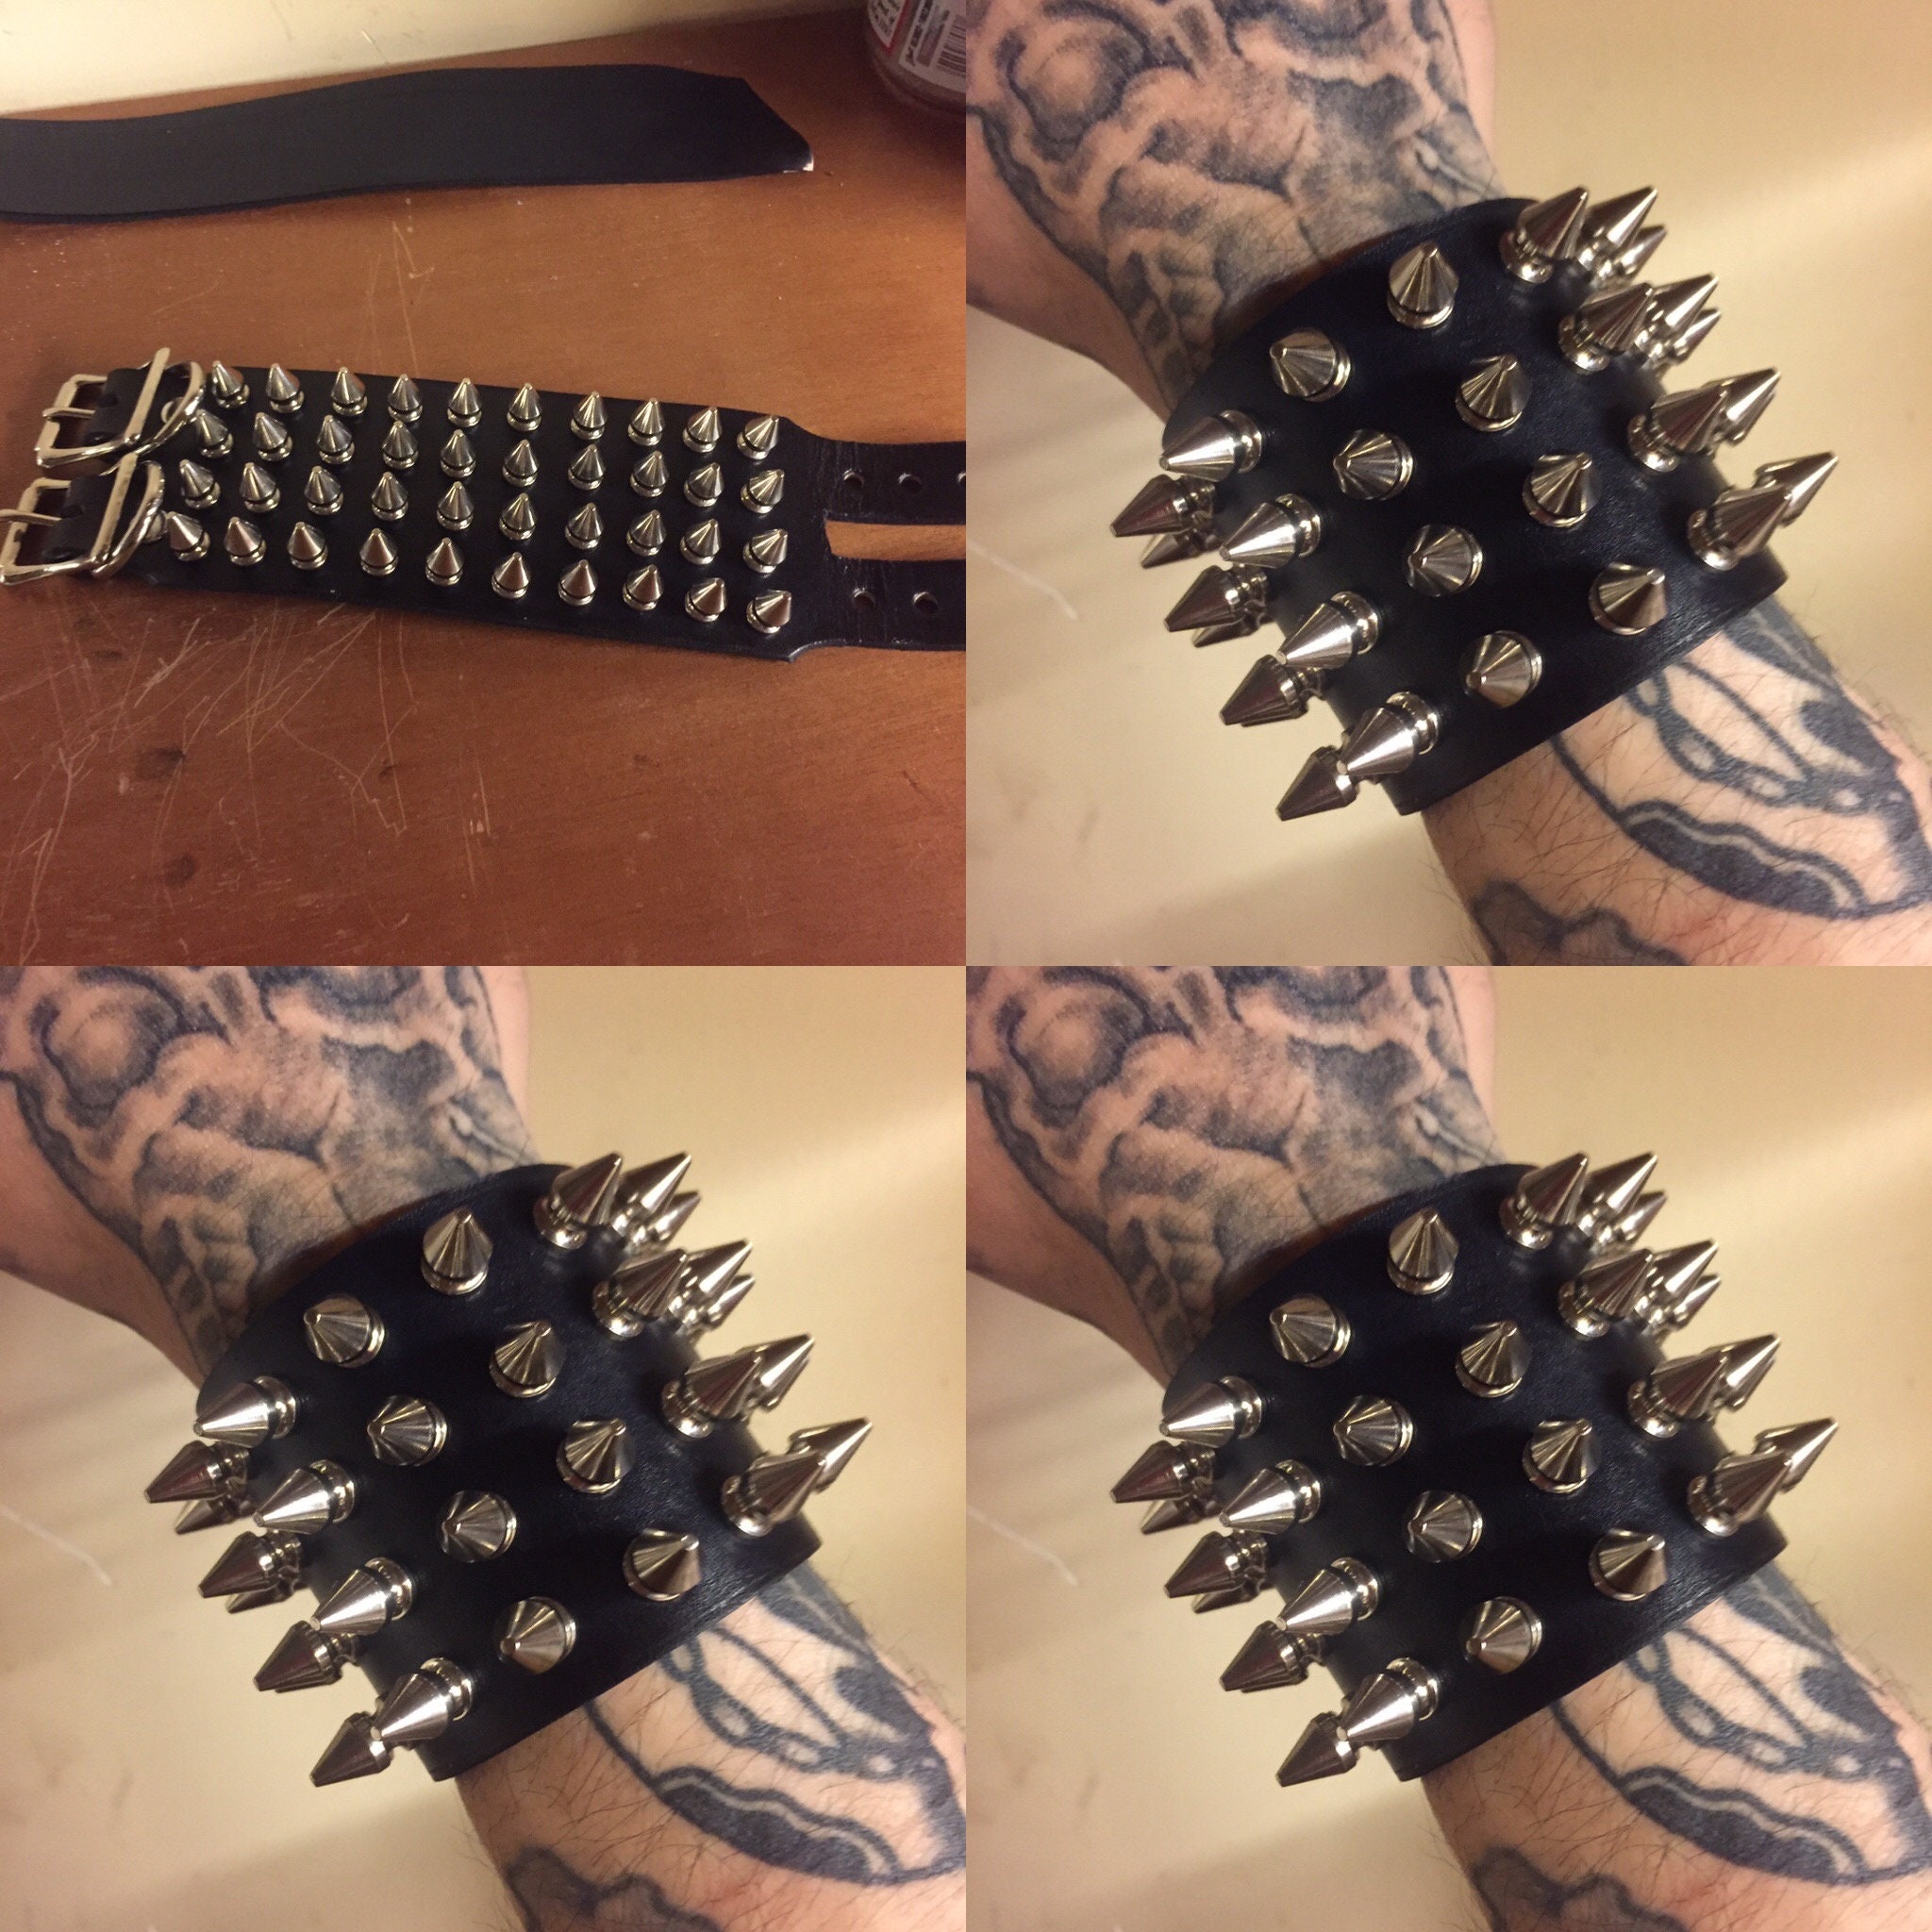 TIDOO Punk Studded Bracelet Goth Rock Leather Spiked Accessories 80s Emo  Jewelry Cool Spike Rivet Cuff Bangle Unisex Pop Metal for Men/Women